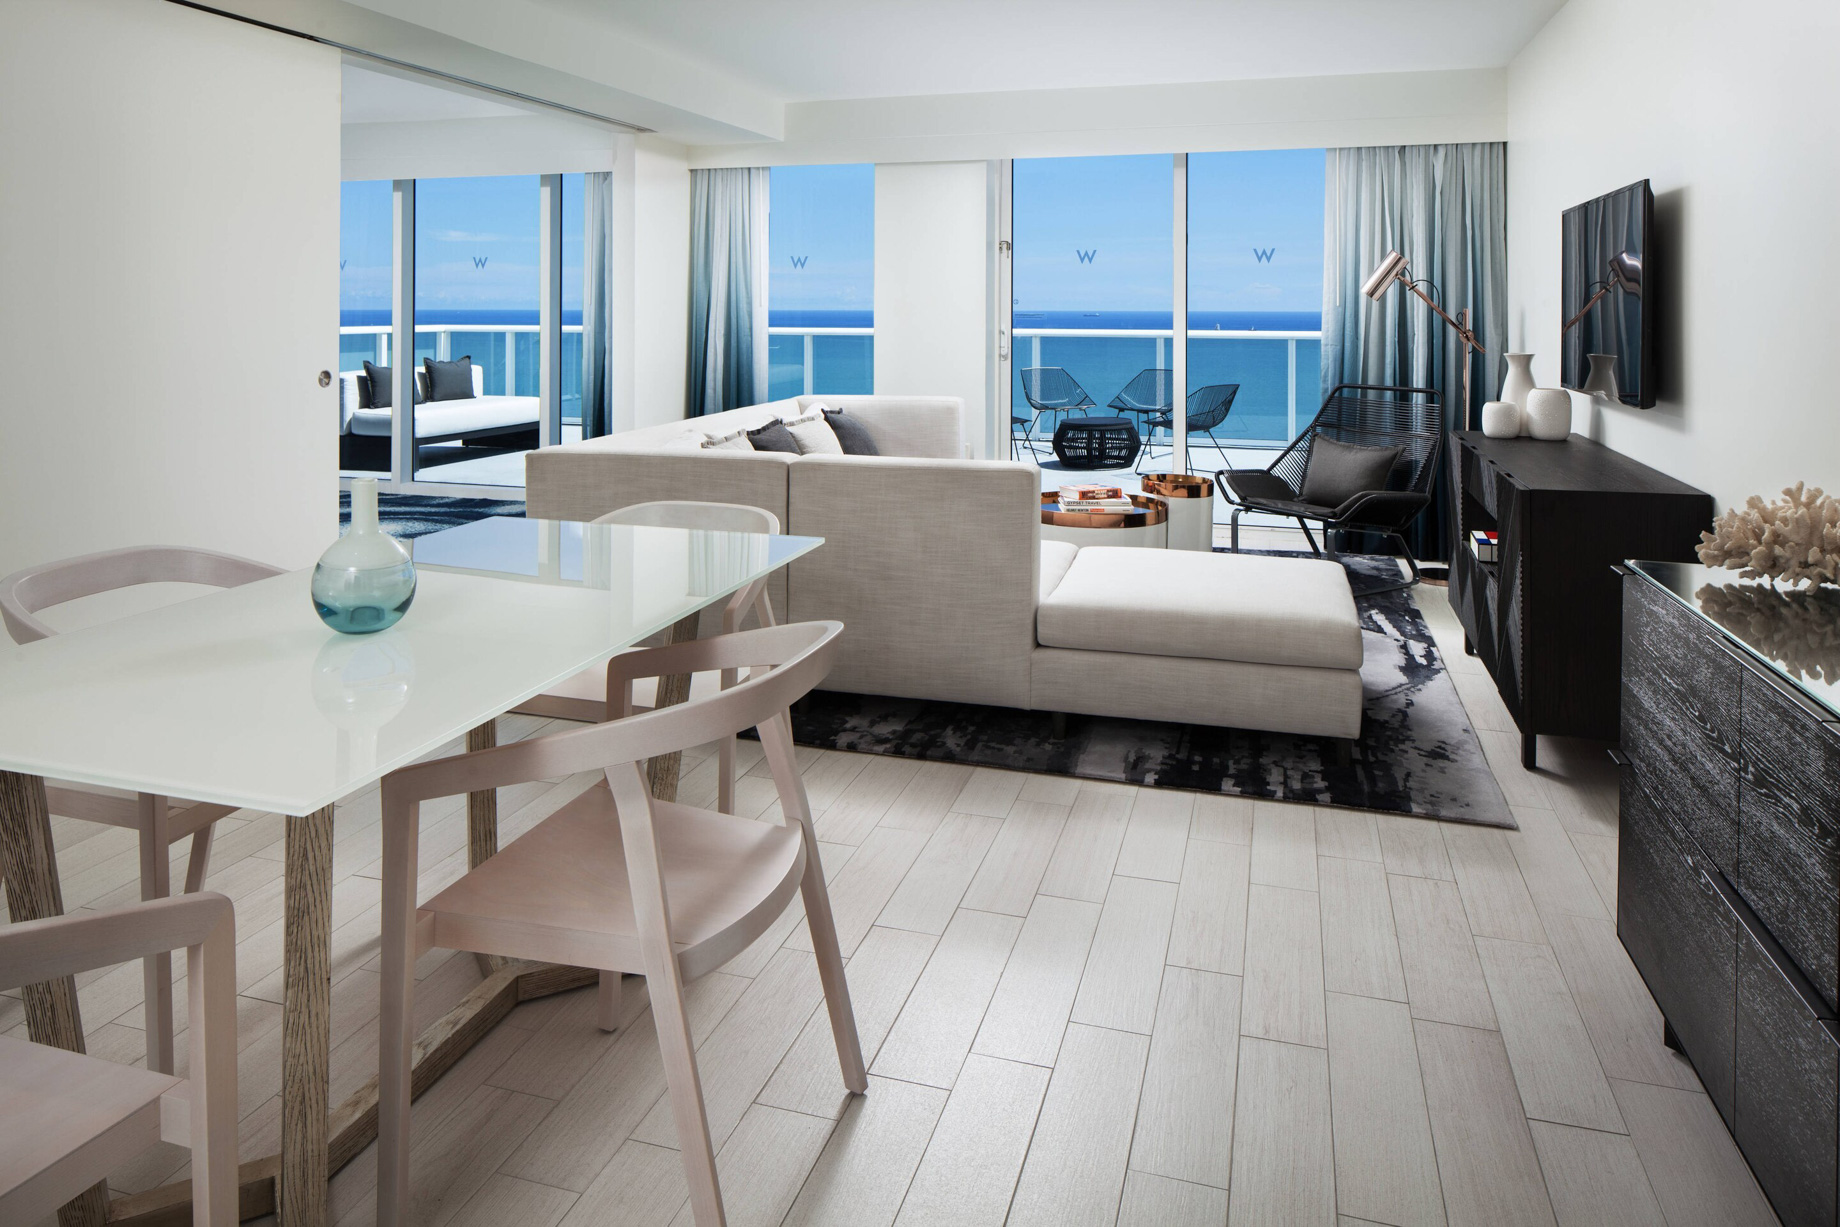 W Fort Lauderdale Hotel – Fort Lauderdale, FL, USA – Oasis Ocean Front Suite Living Room